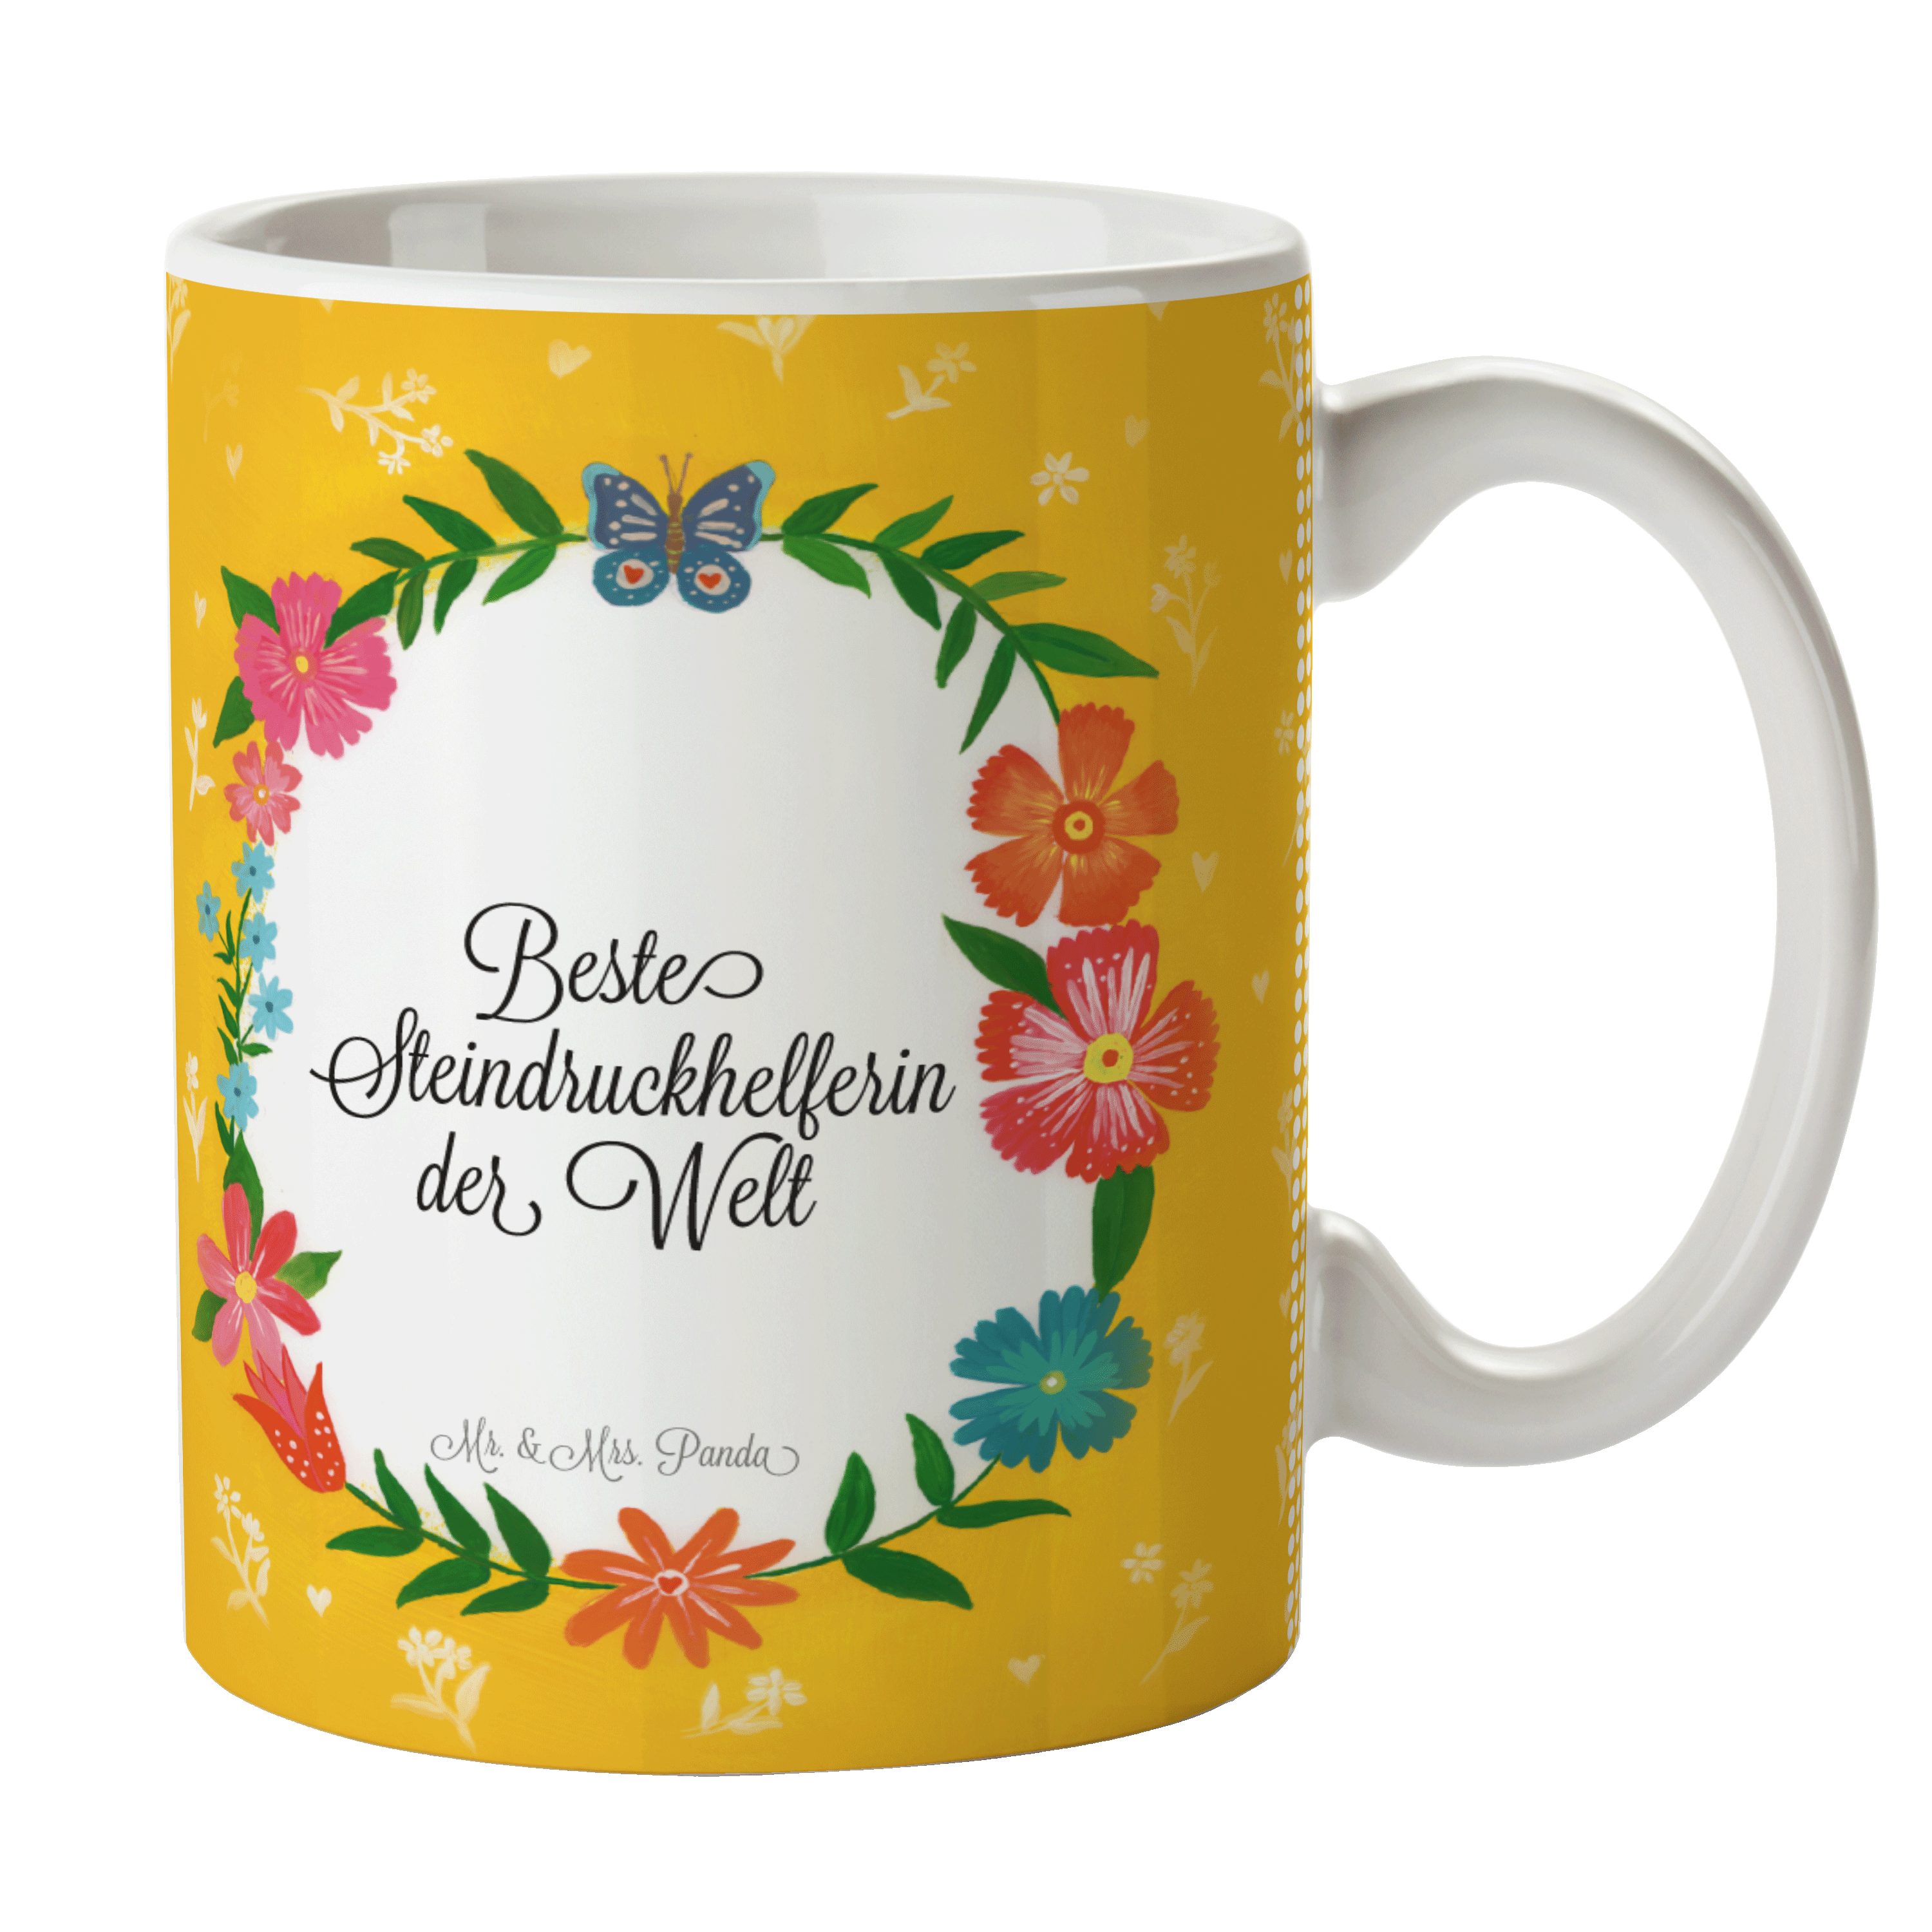 Mr. & Mrs. Panda Kaffeetasse, Geschenk, Tasse Ausbildung, - Kaffeebecher, Steindruckhelferin Keramik